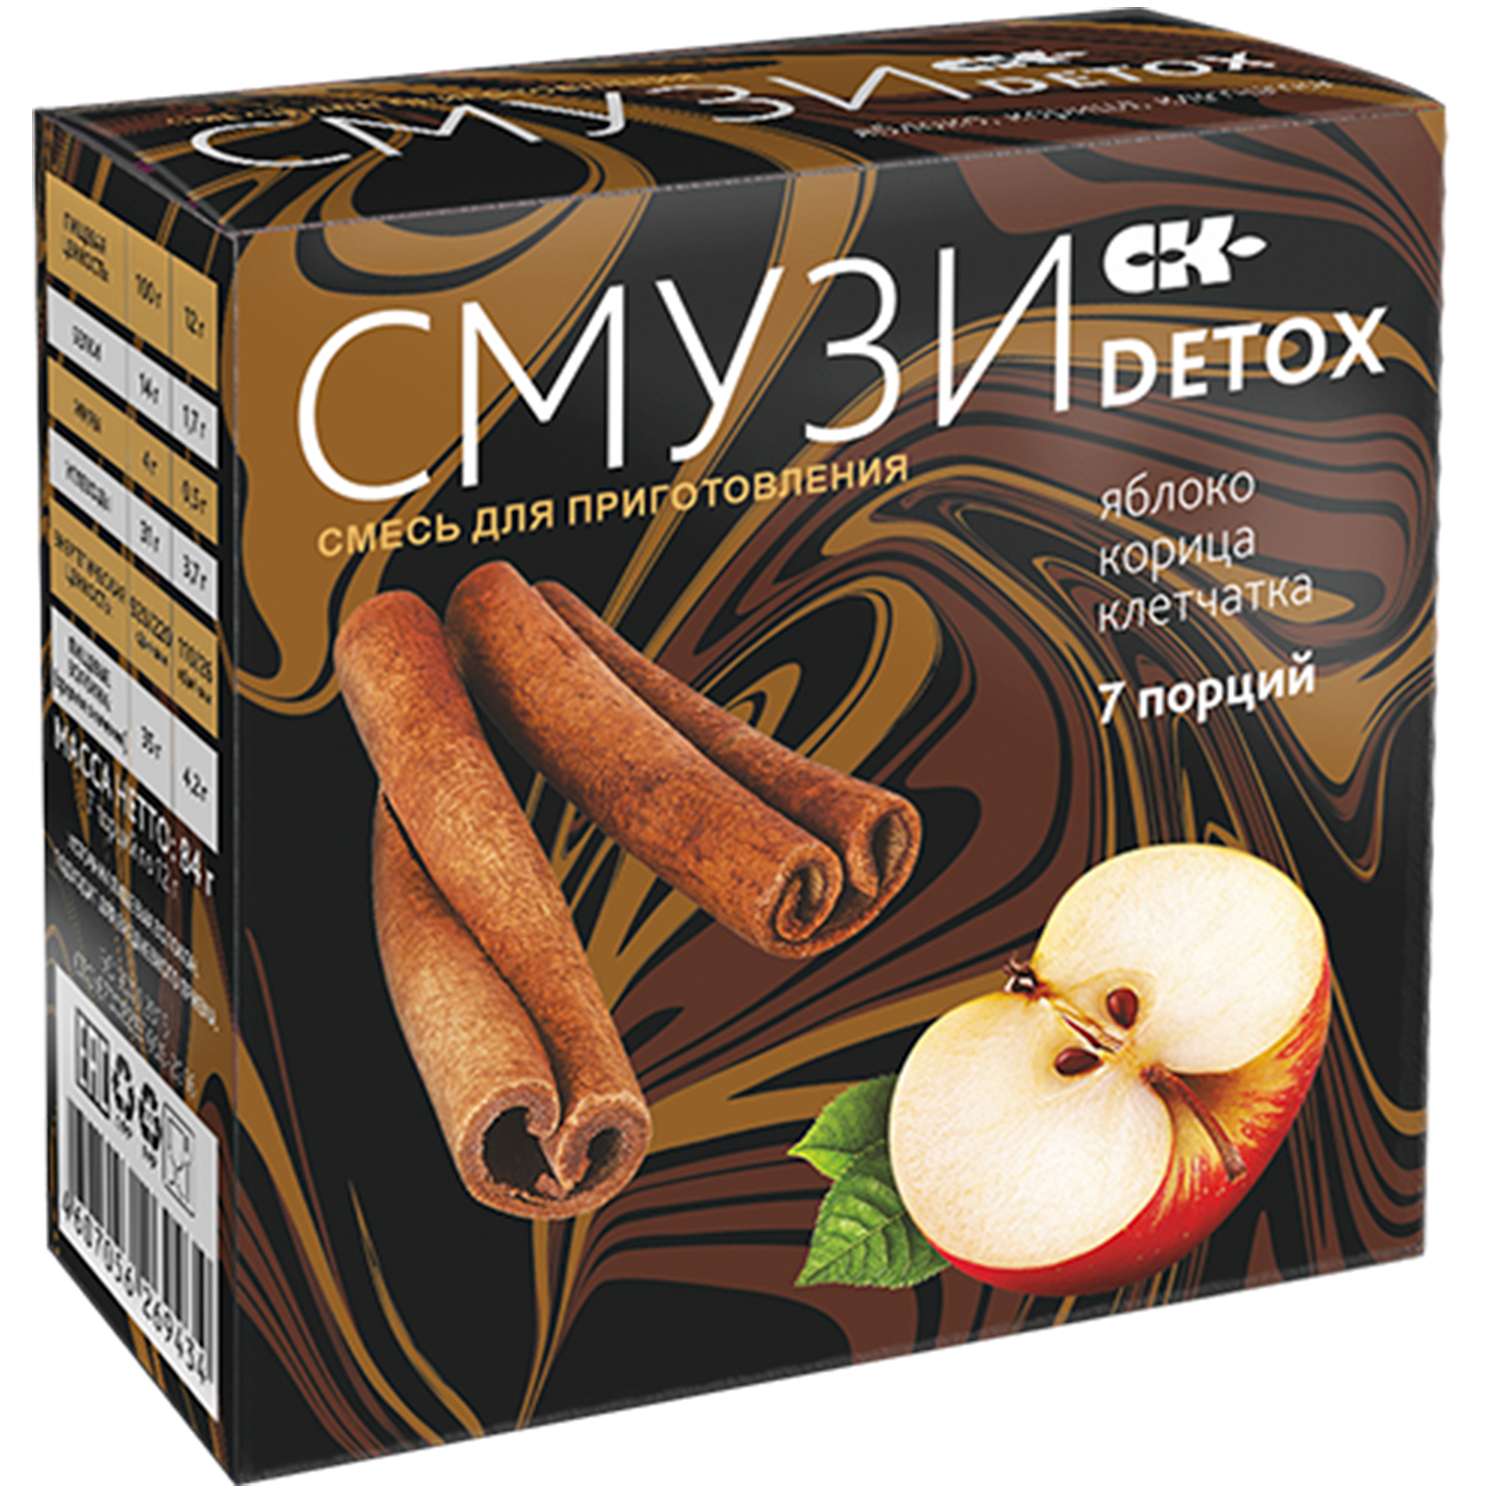 Смузи Сибирская клетчатка Detox яблоко-корица 12г*7пакетиков - фото 1